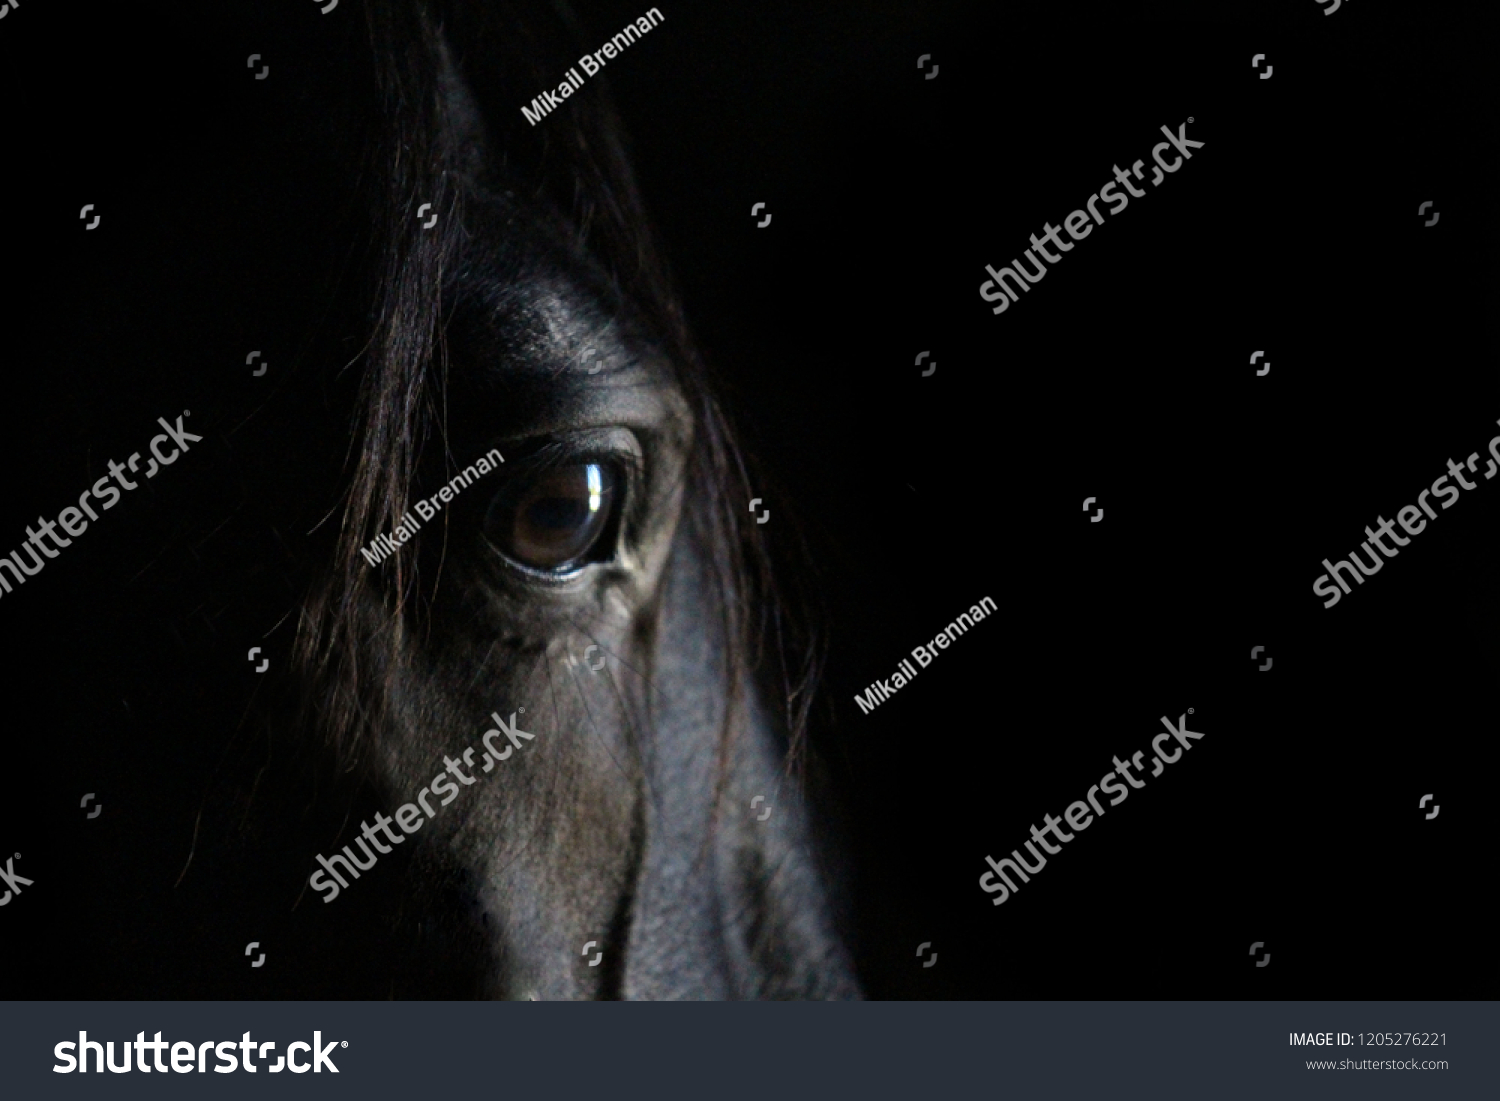 Thoughtful horse eye portrait. #1205276221